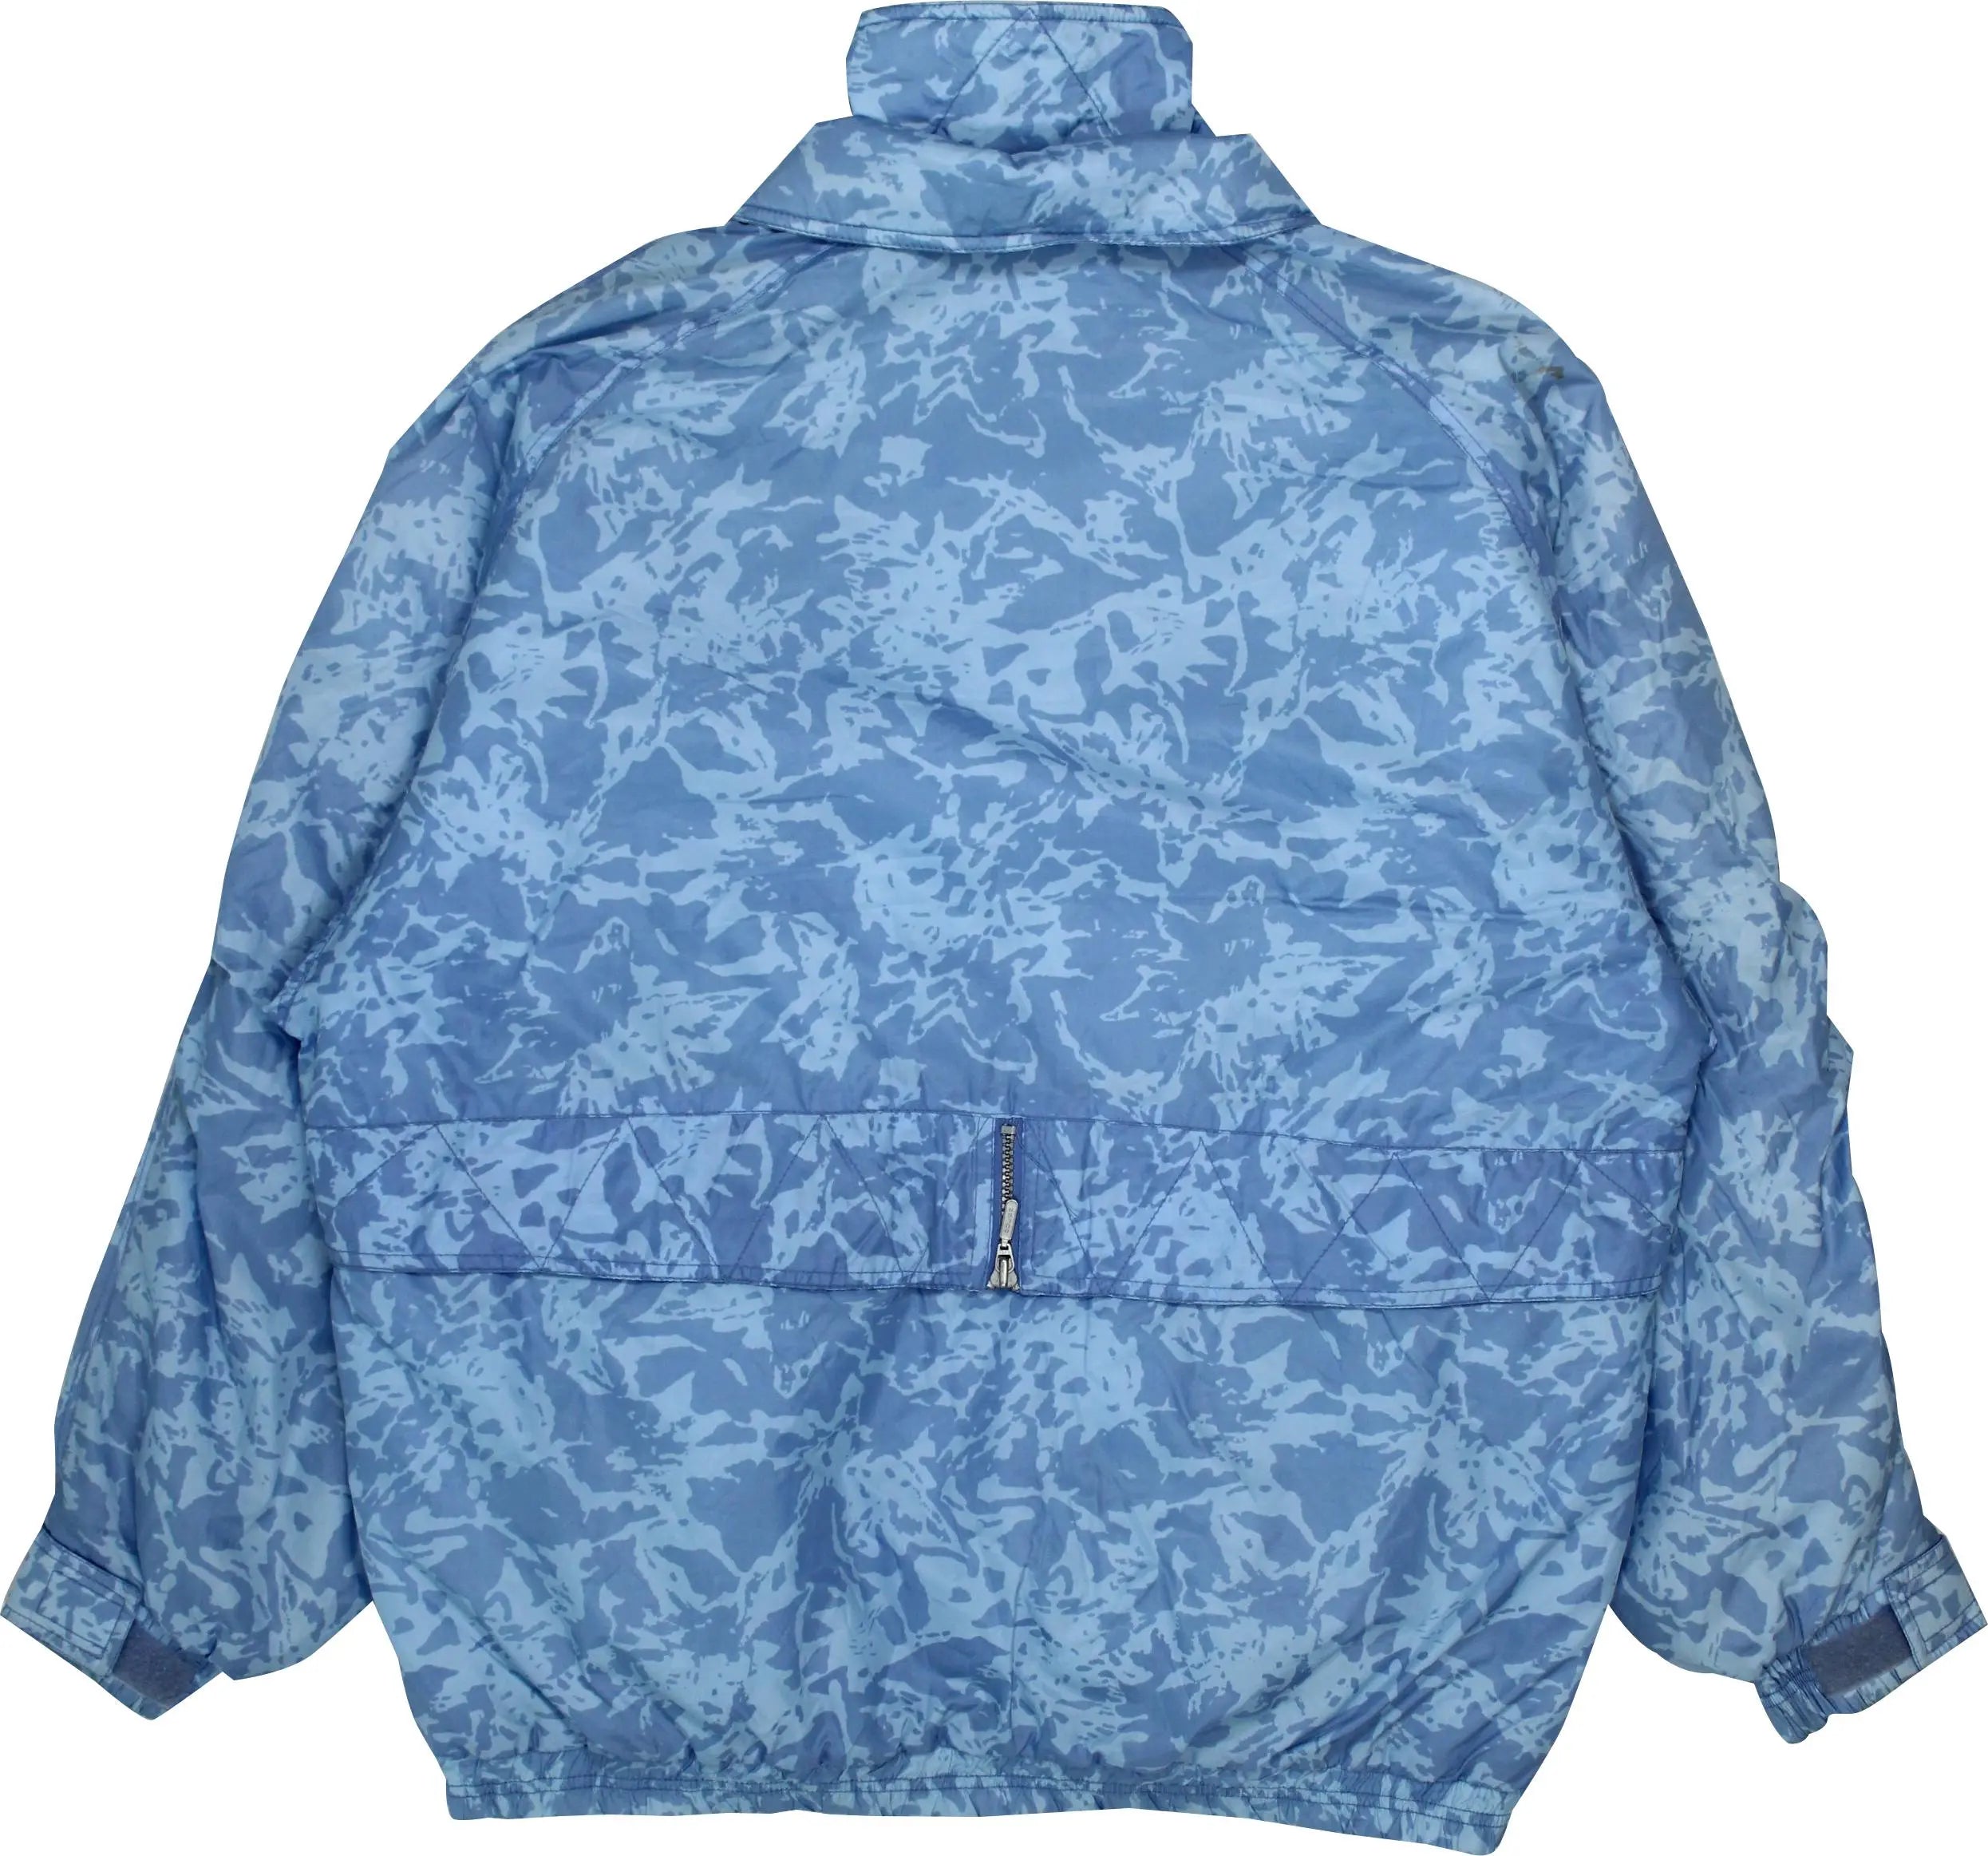 Dig-It - Vintage Blue Winter Jacket- ThriftTale.com - Vintage and second handclothing